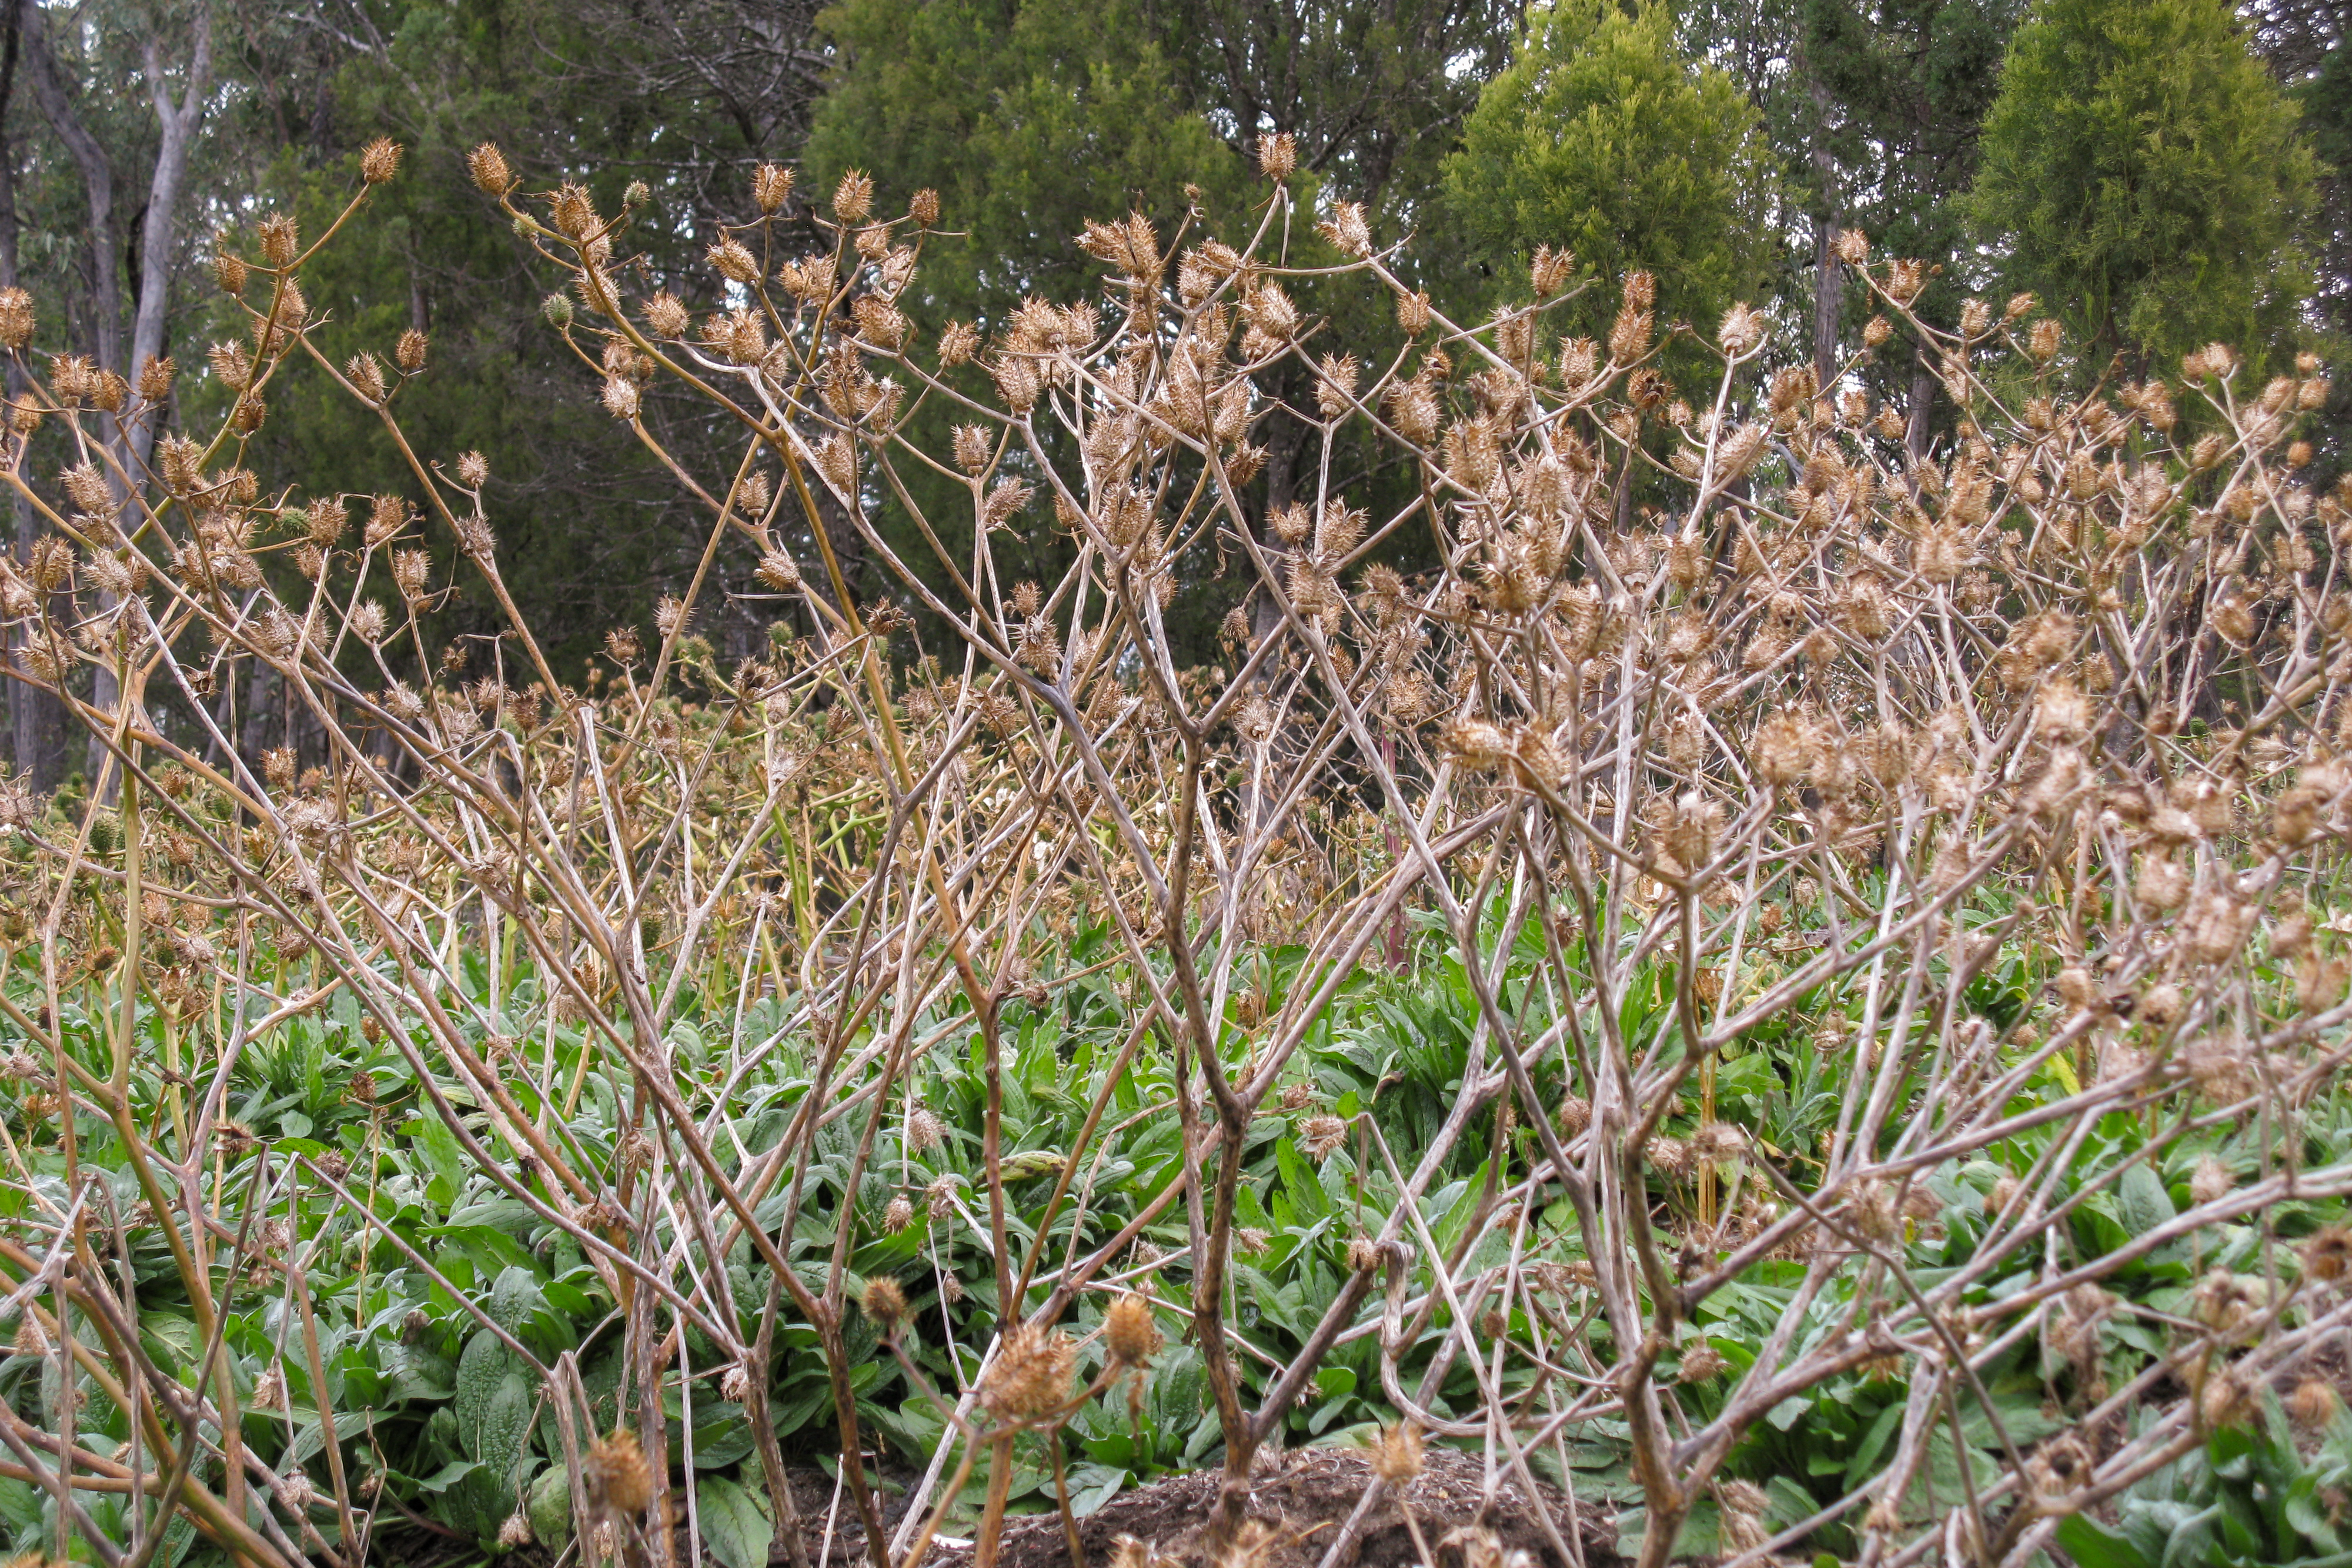 Datura stramonium (jimsonweed); Infestation. New South Wales, Australia. July 2014.